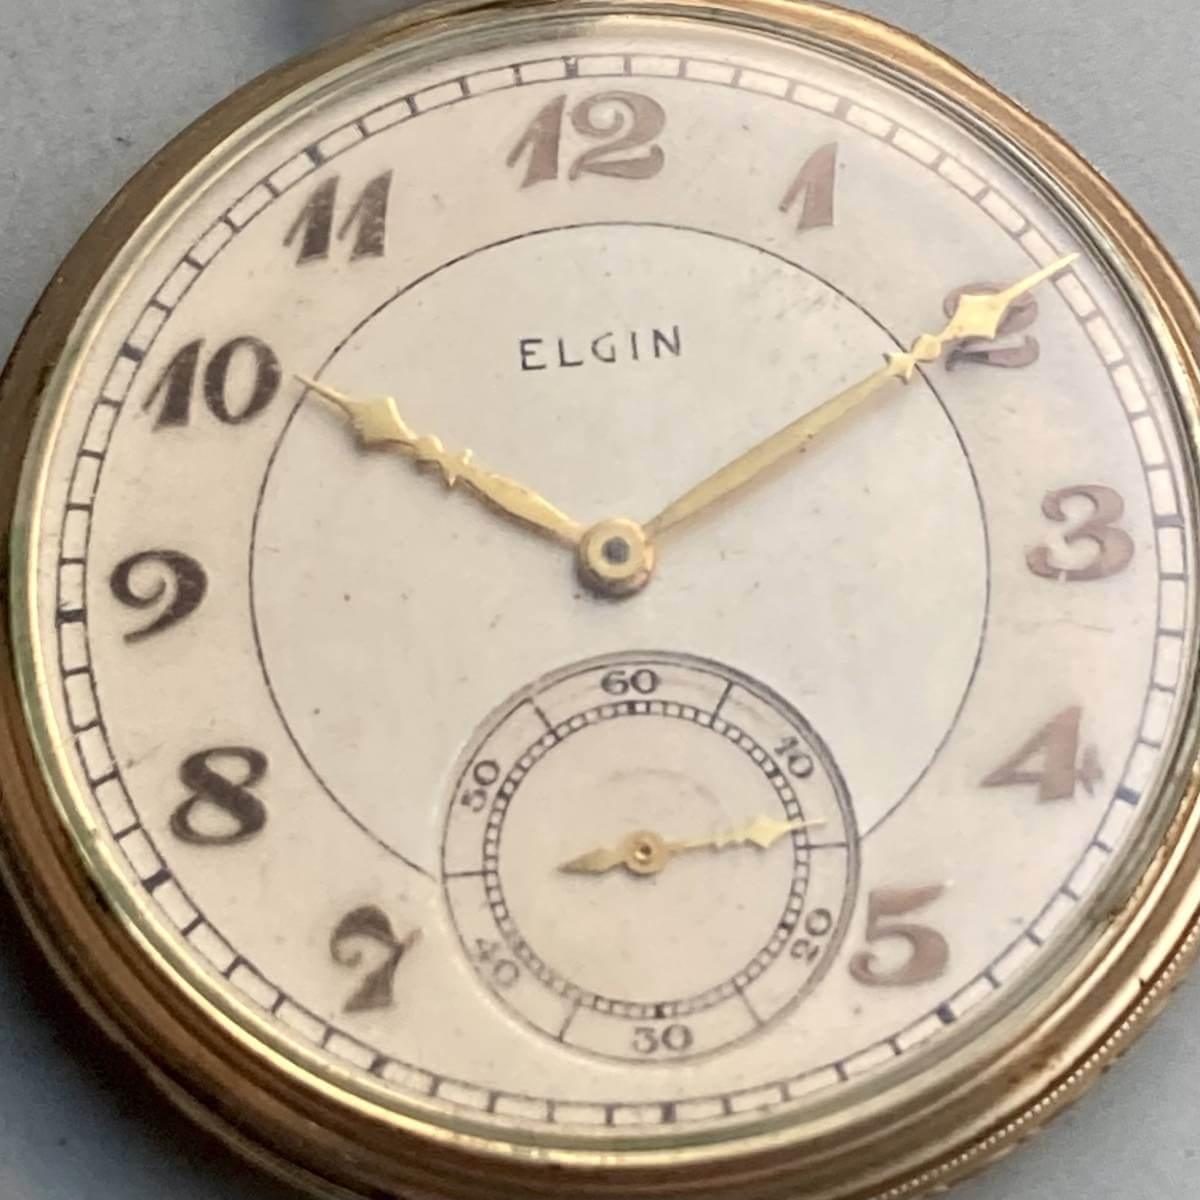 Elgin Pocket Watch Antique Manual Open Face 44mm Vintage - Murphy Johnson Watches Co.